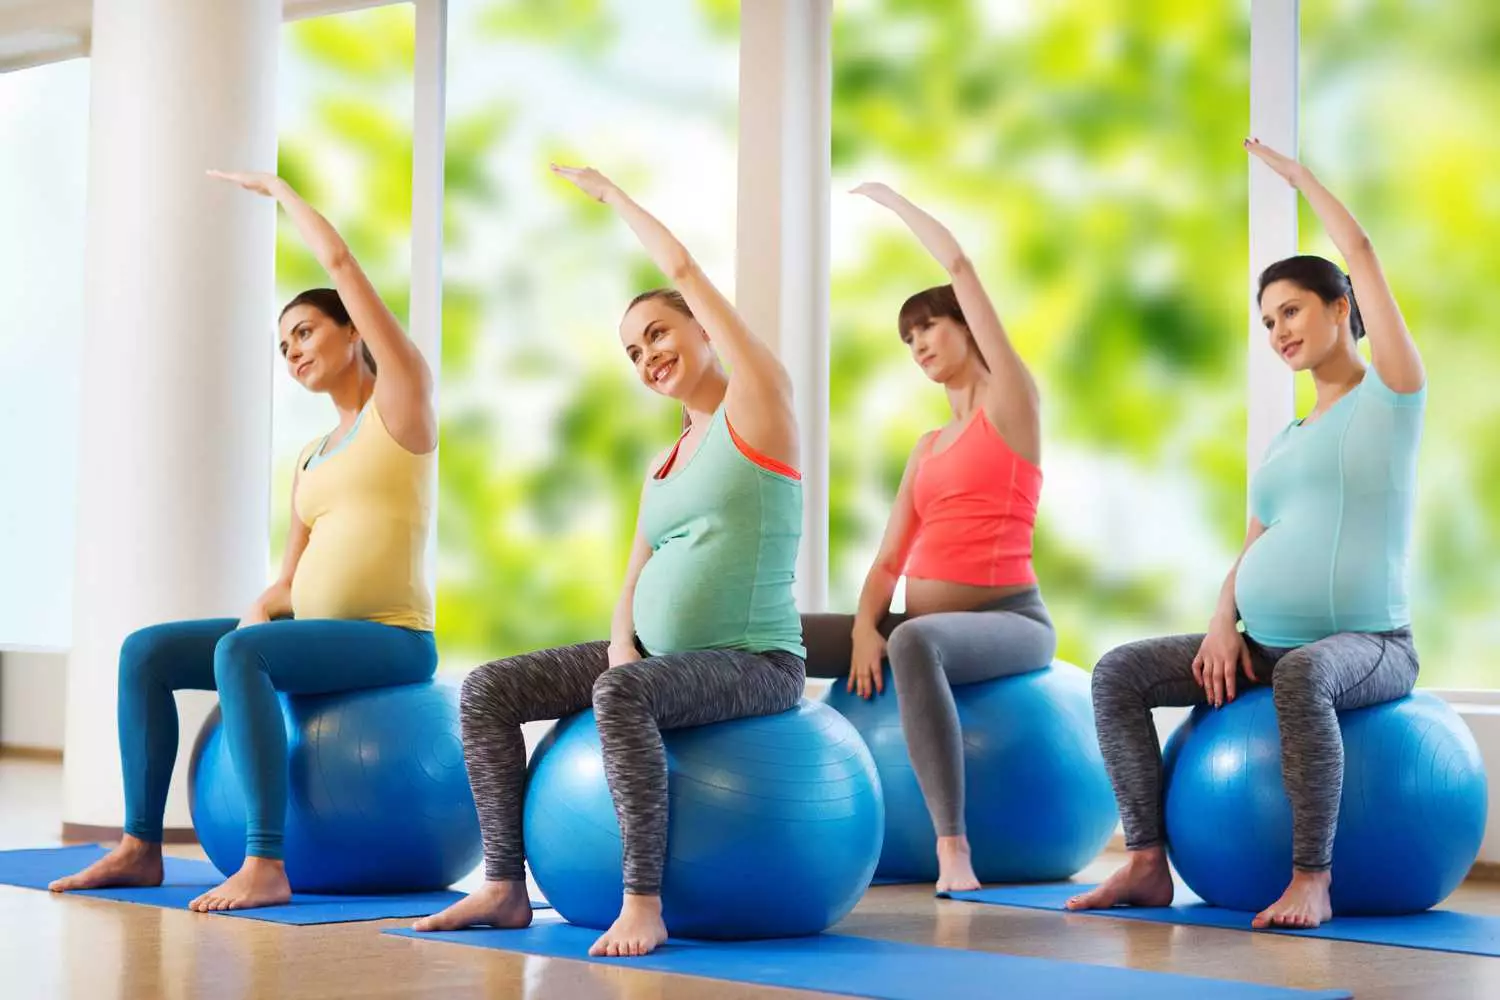 birthing ball exercises pelvic floor exercises - 